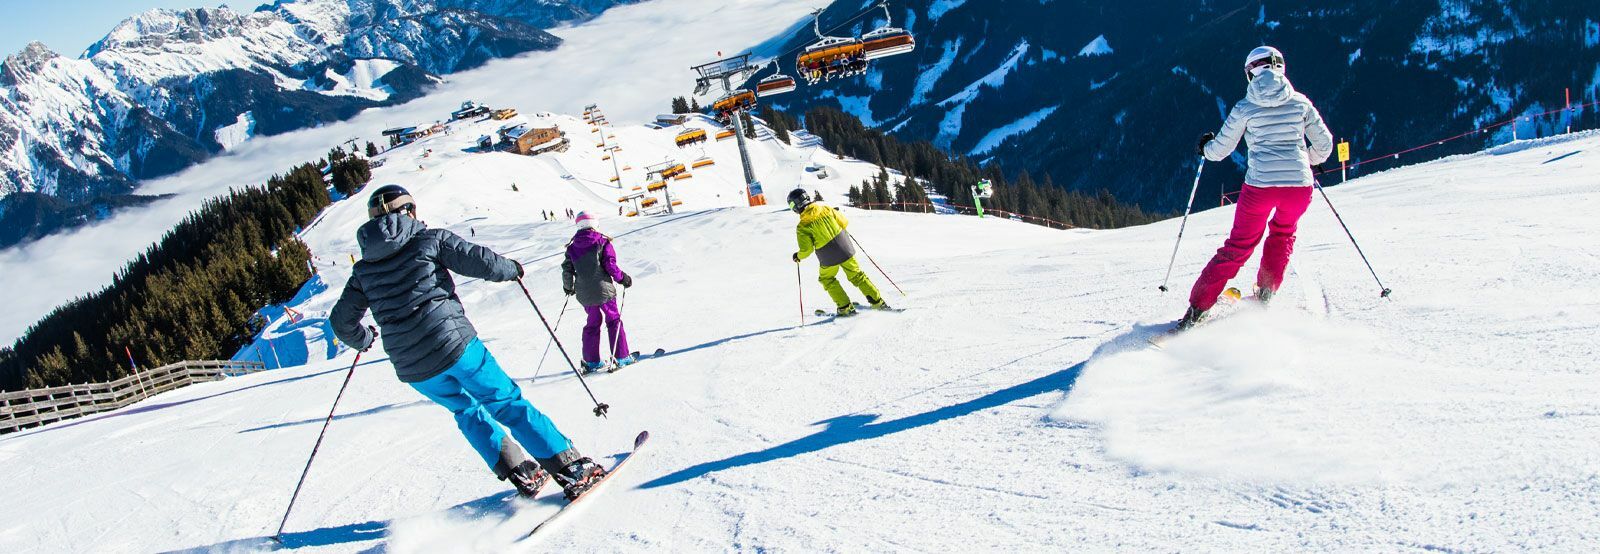 Ski Resorts Guide, Ski Holiday Destinations